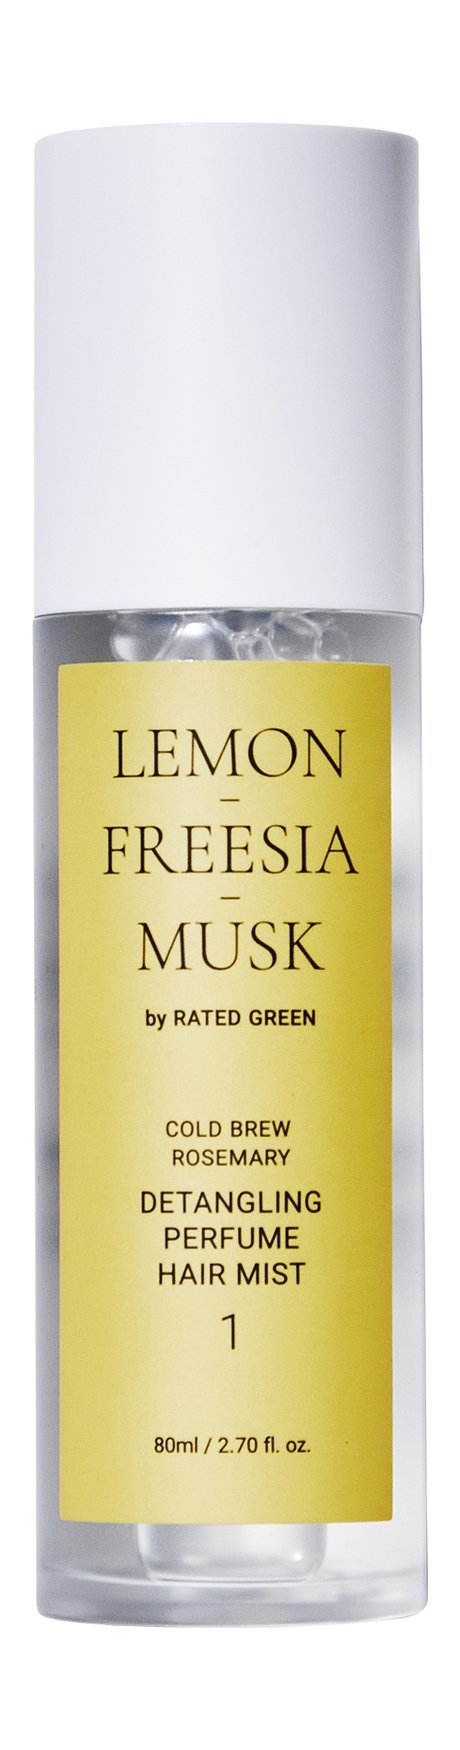 rated green detangling perfume hair mist 1 - lemon-freesia-musk